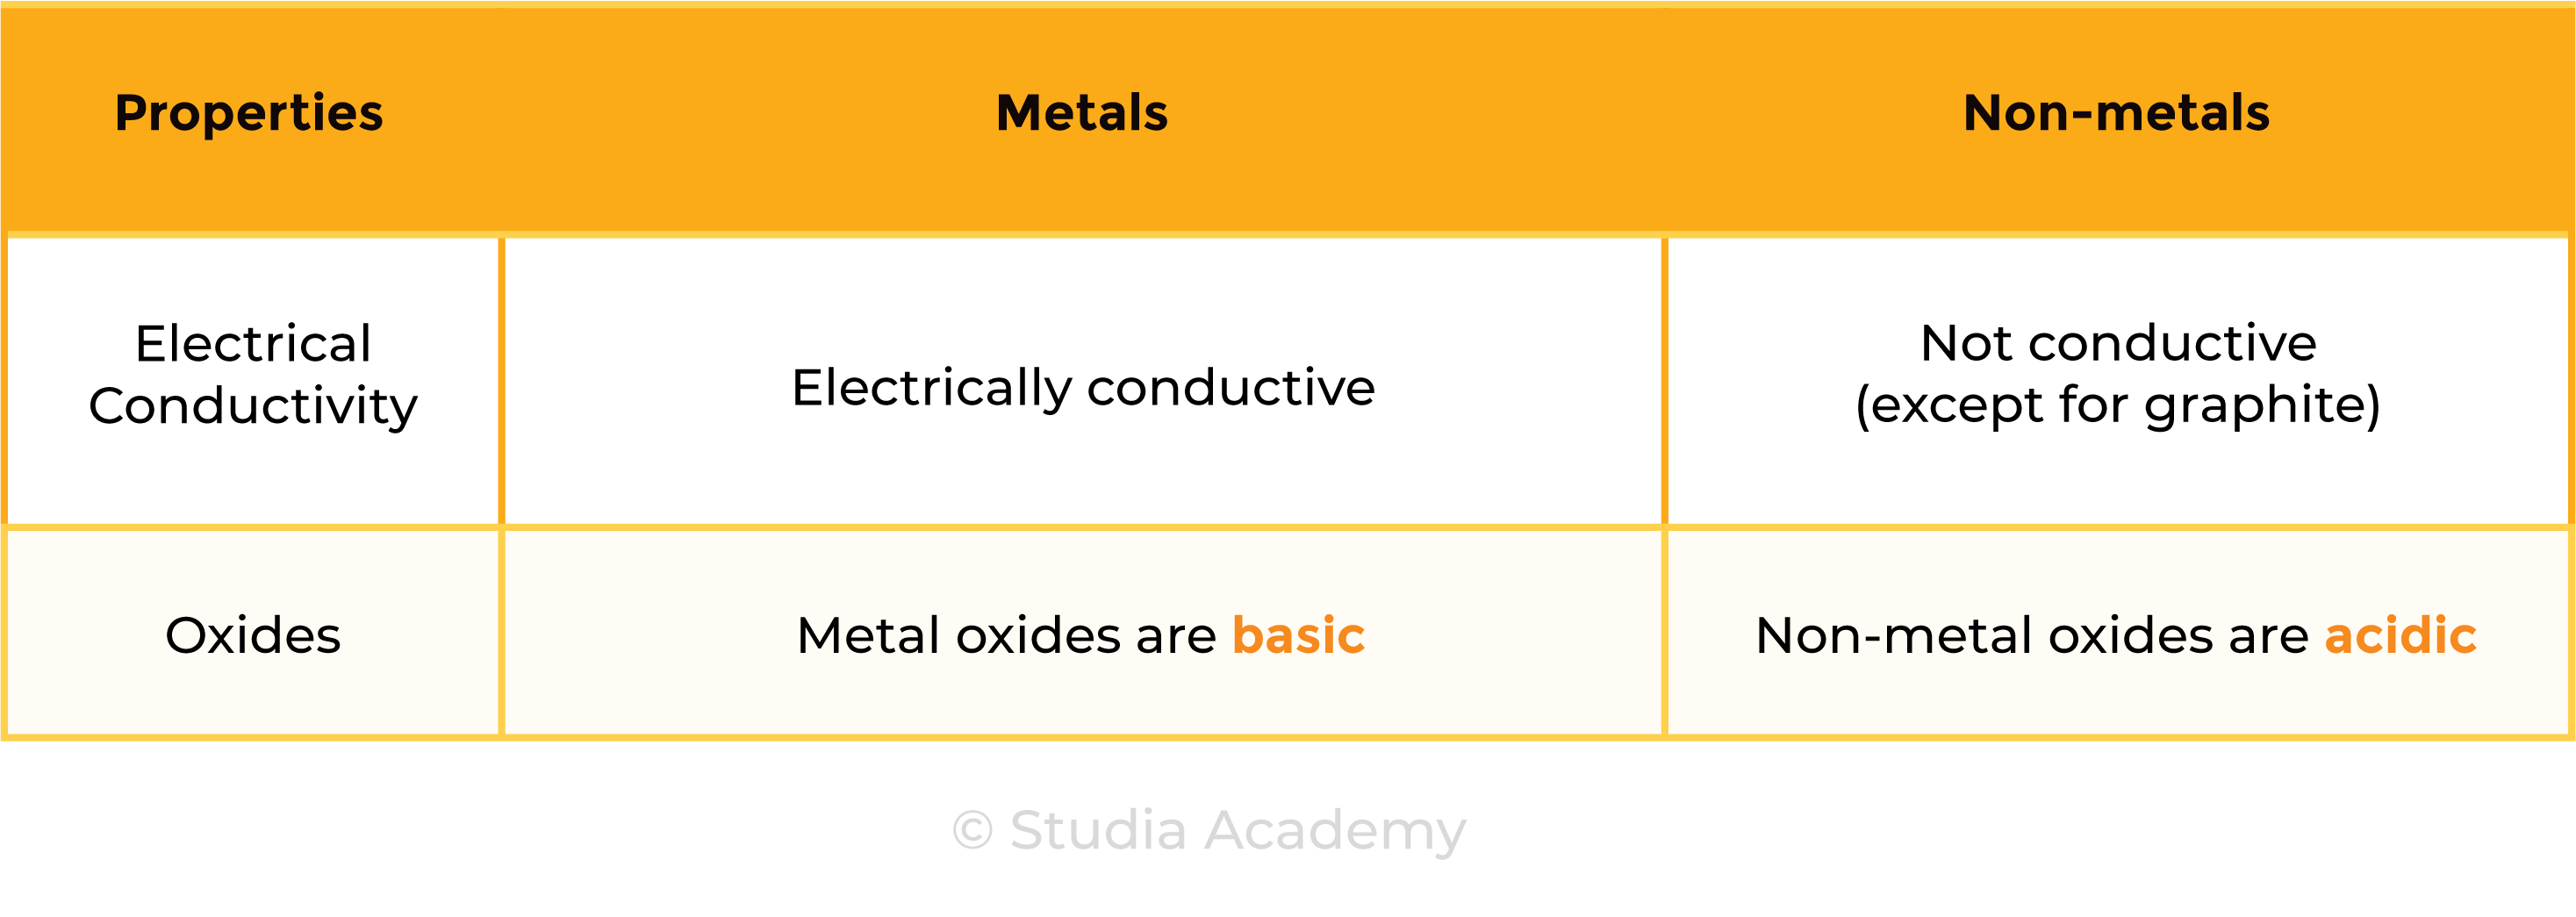 edexcel_igcse_chemistry_topic 04 tables_the periodic table_002_metals vs non metals